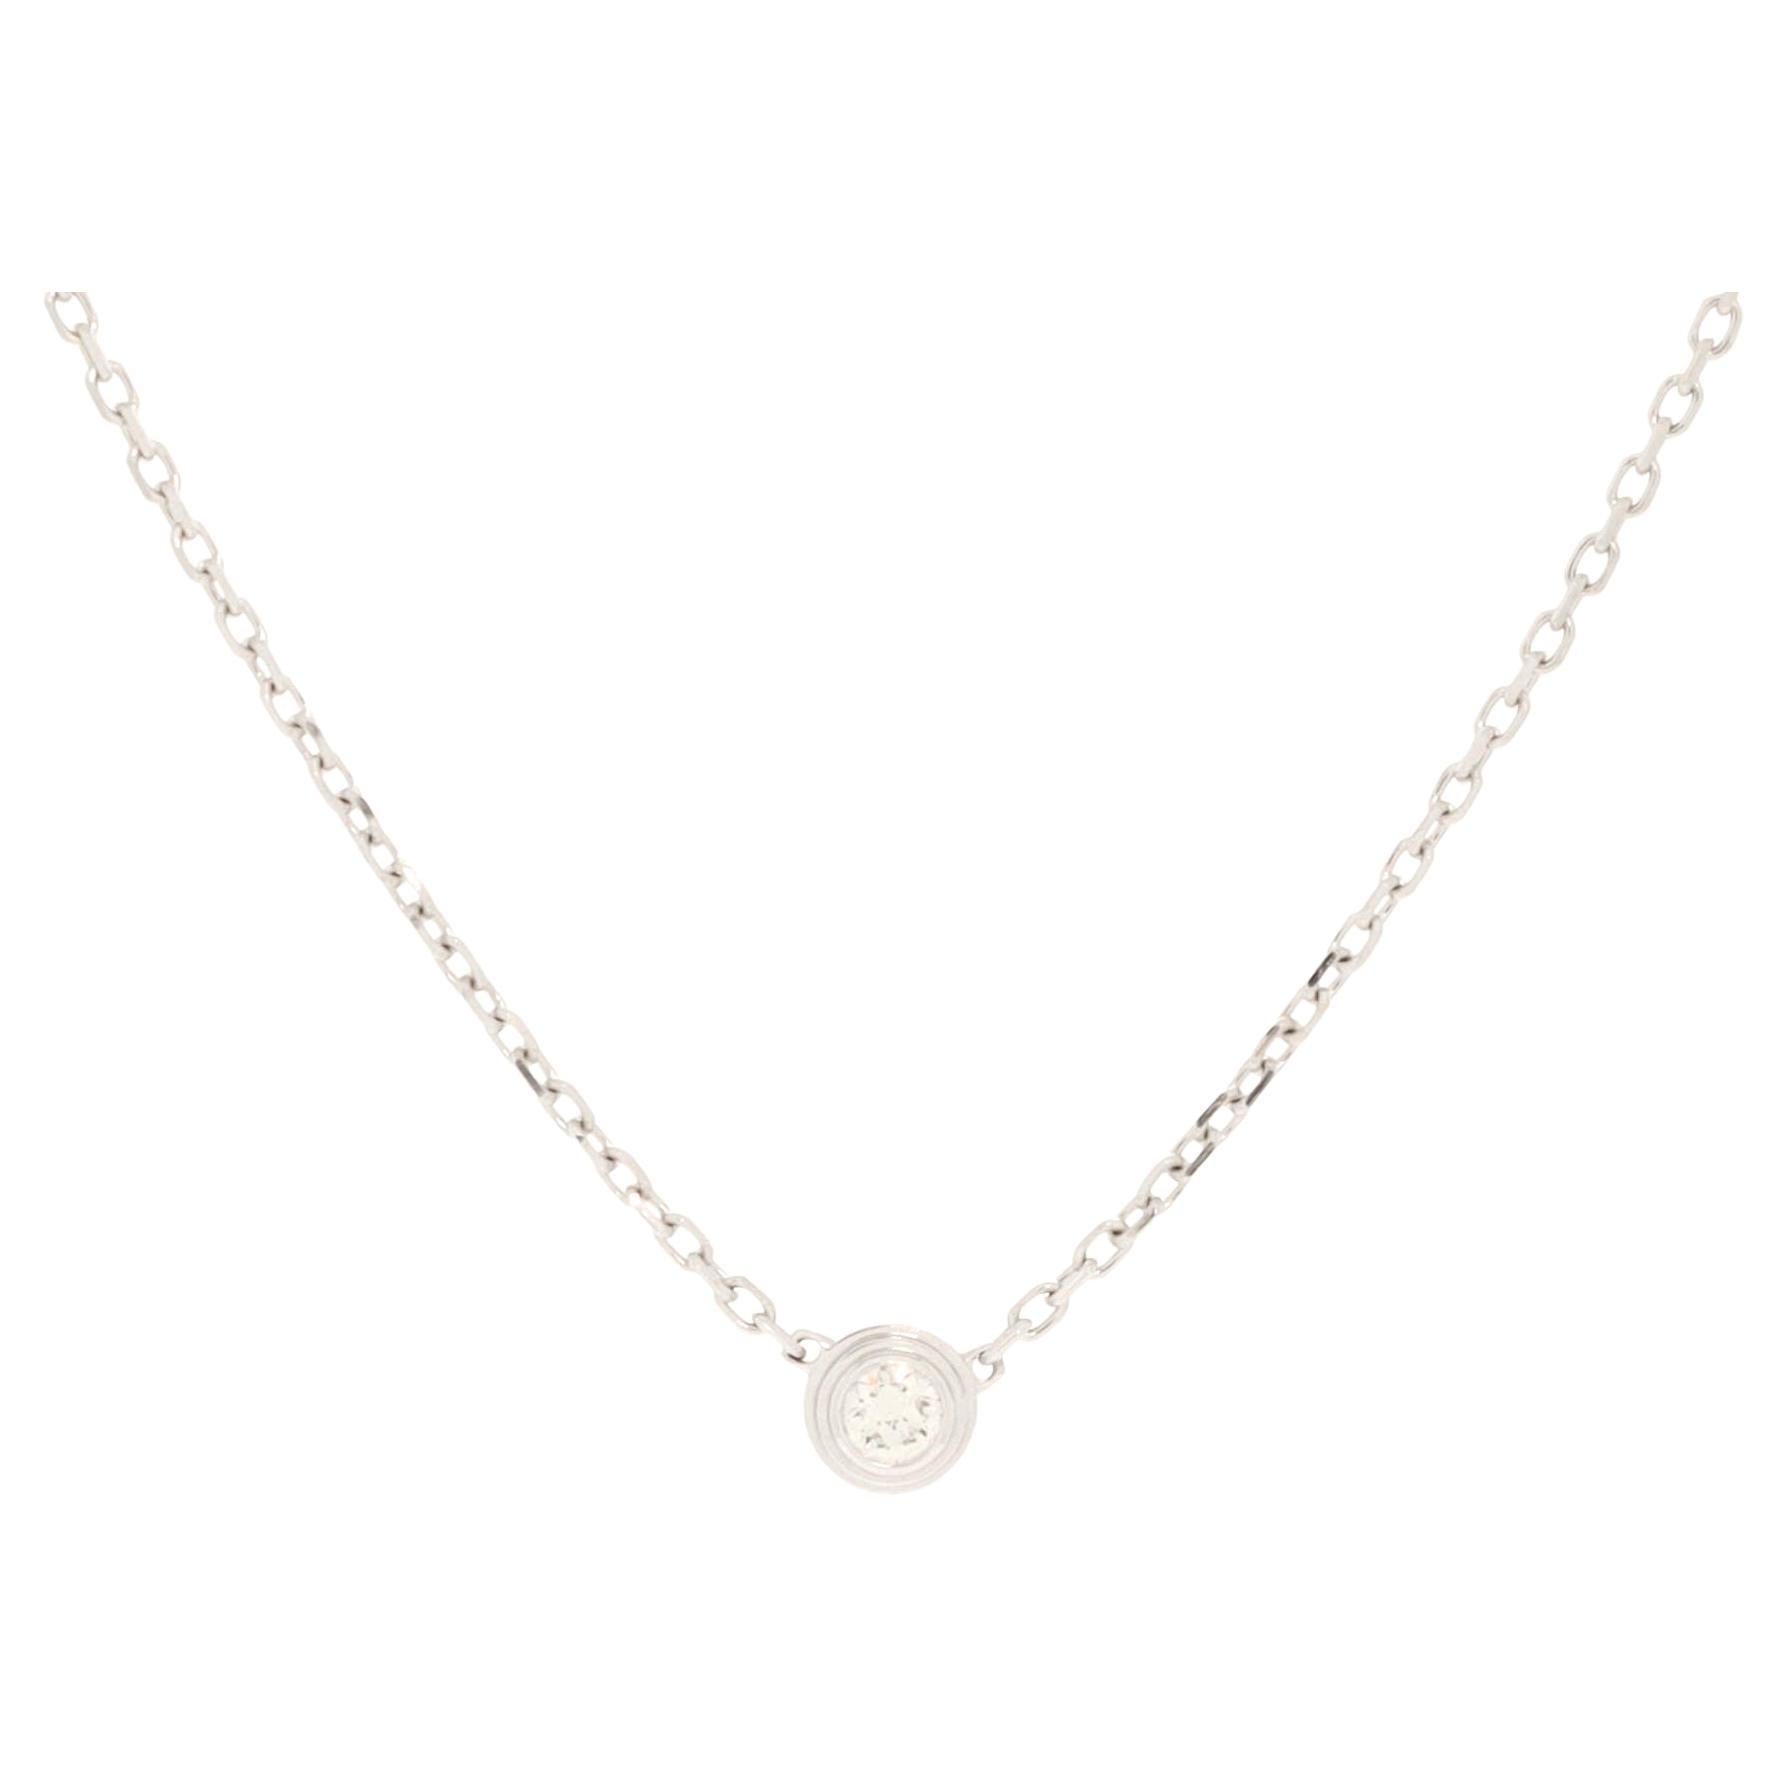 Cartier D'Amour Pendant Necklace 18K White Gold and Diamond XS